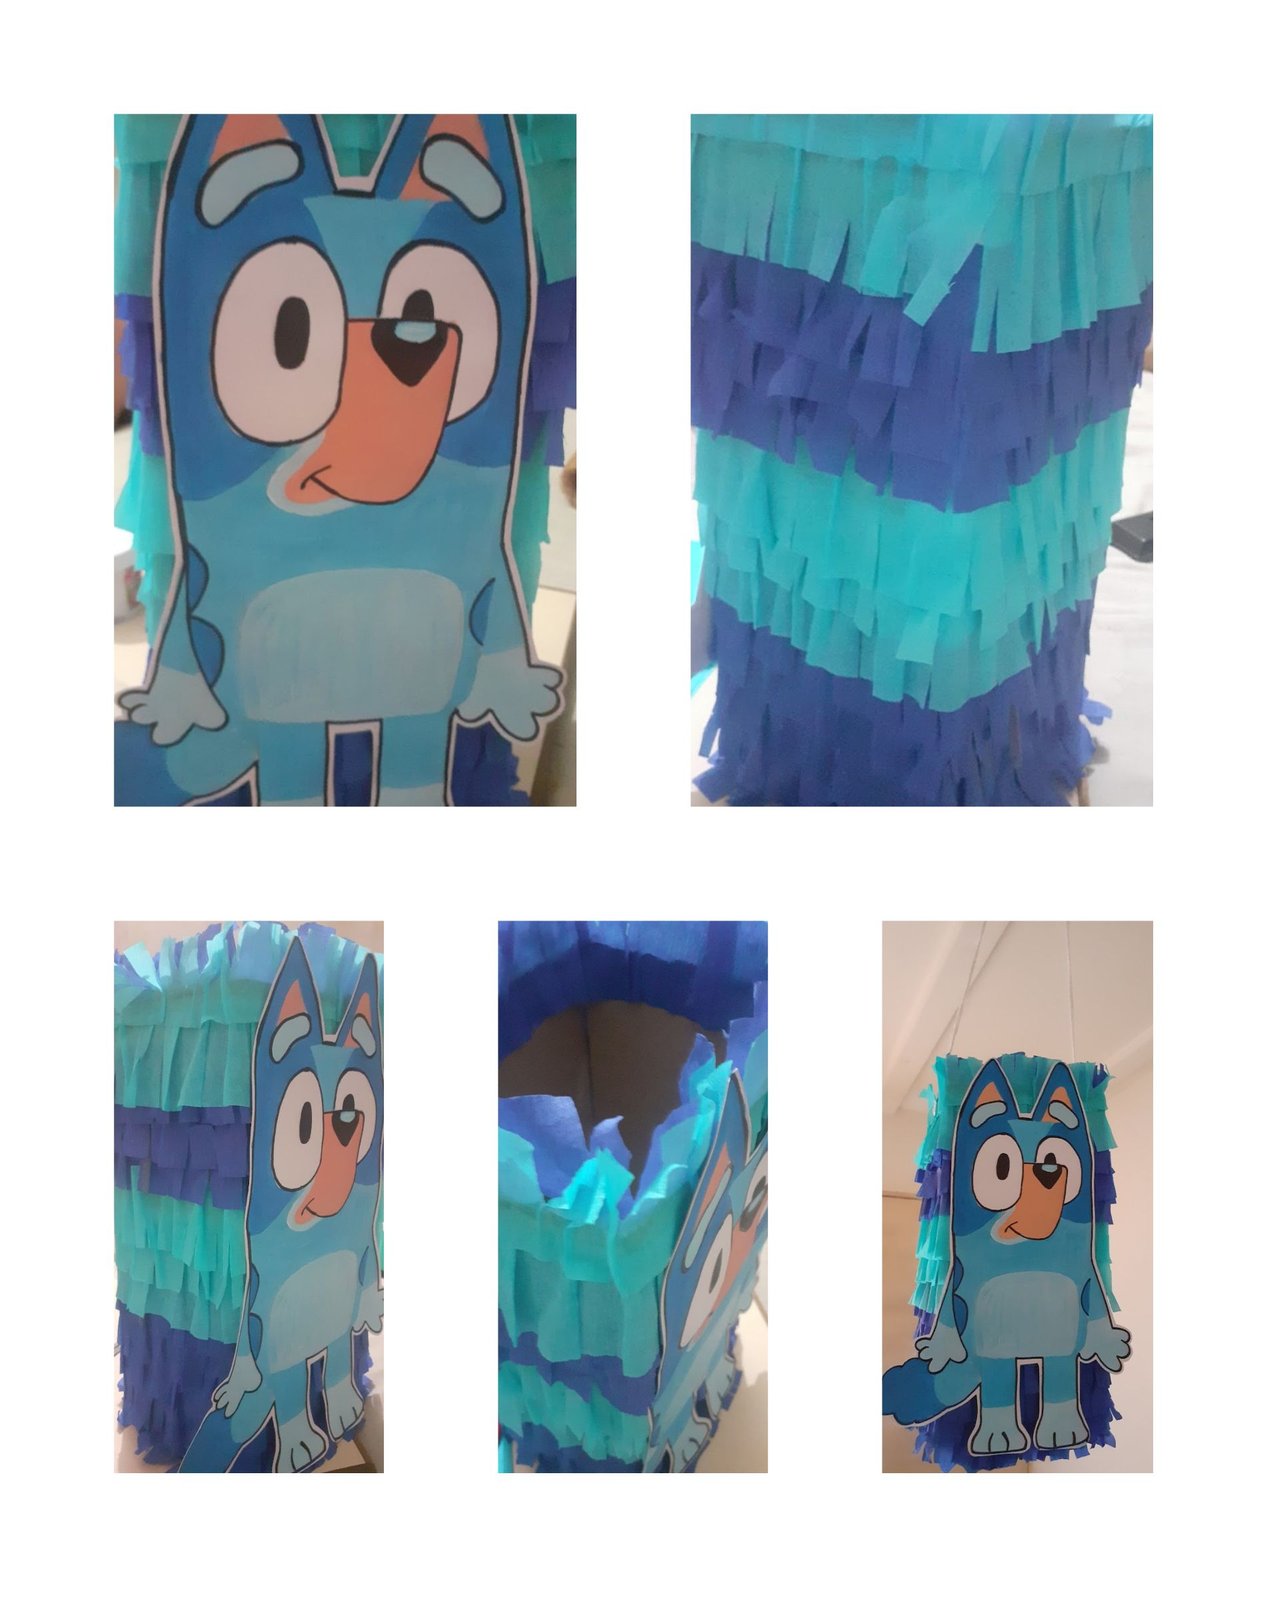 Piñata Decorativa para Cumpleaños Bluey